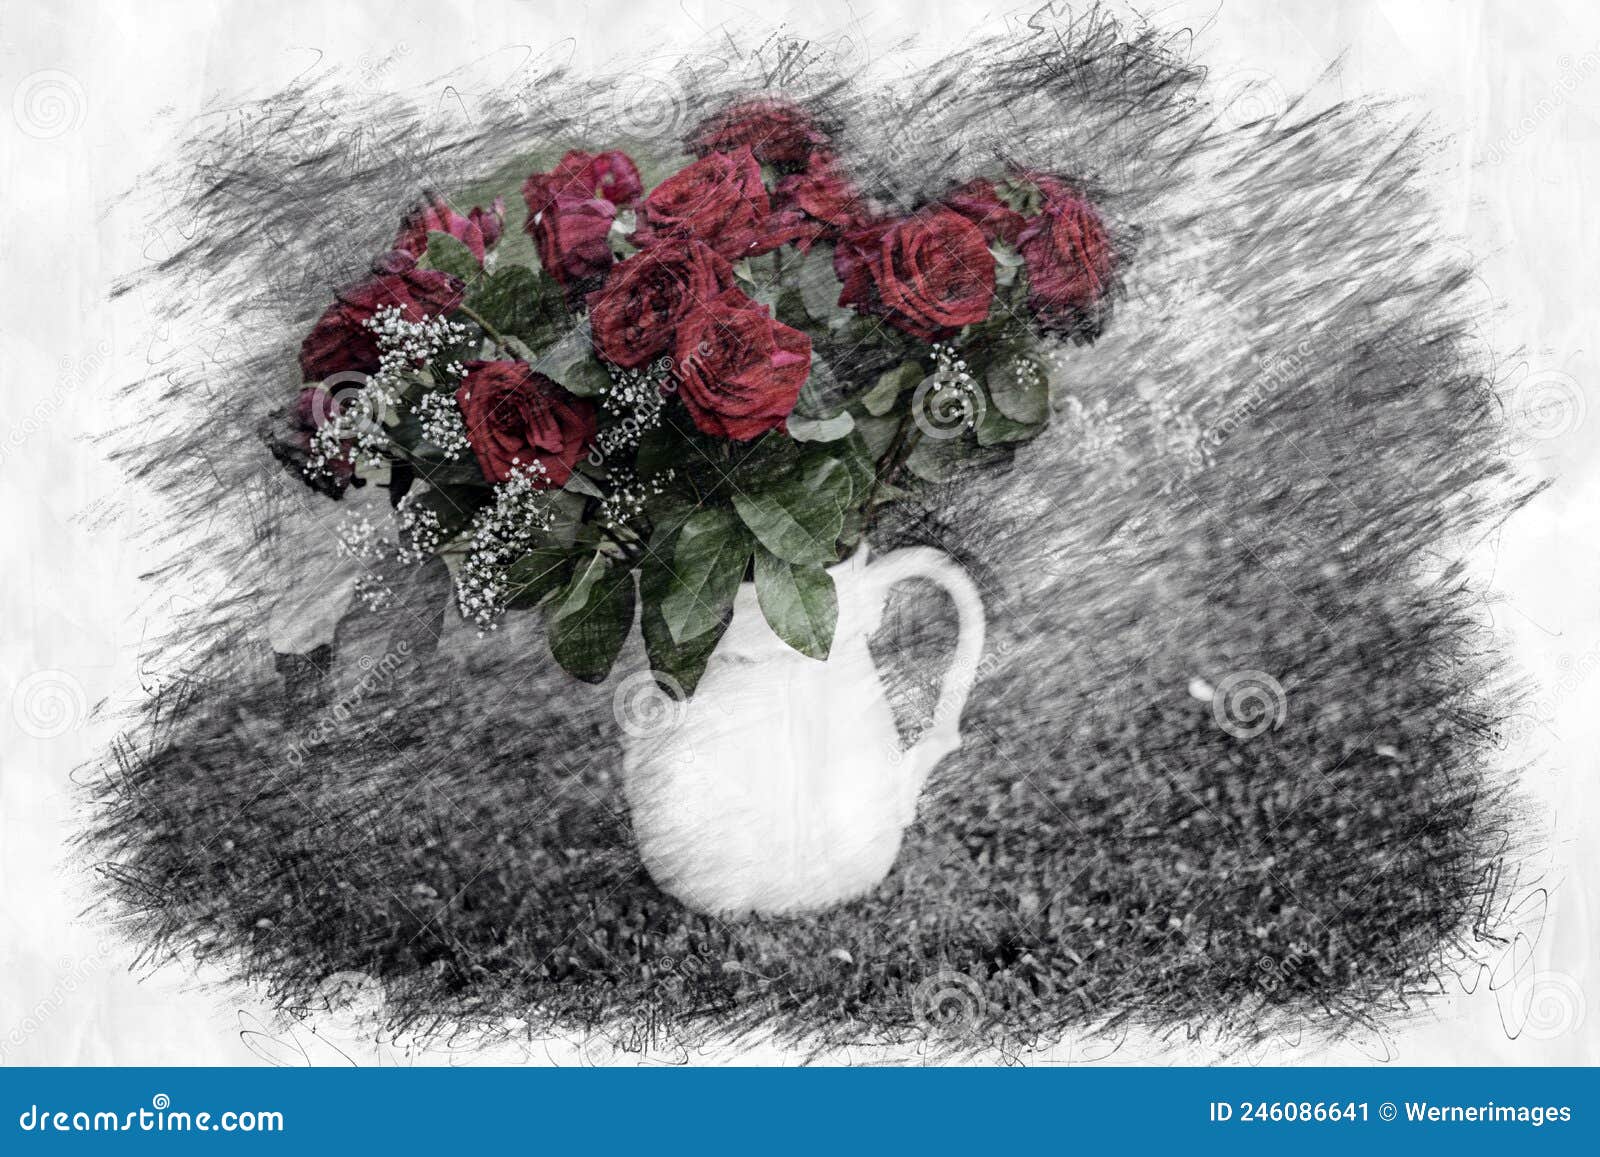 Flowers in a vase by splotchy on DeviantArt